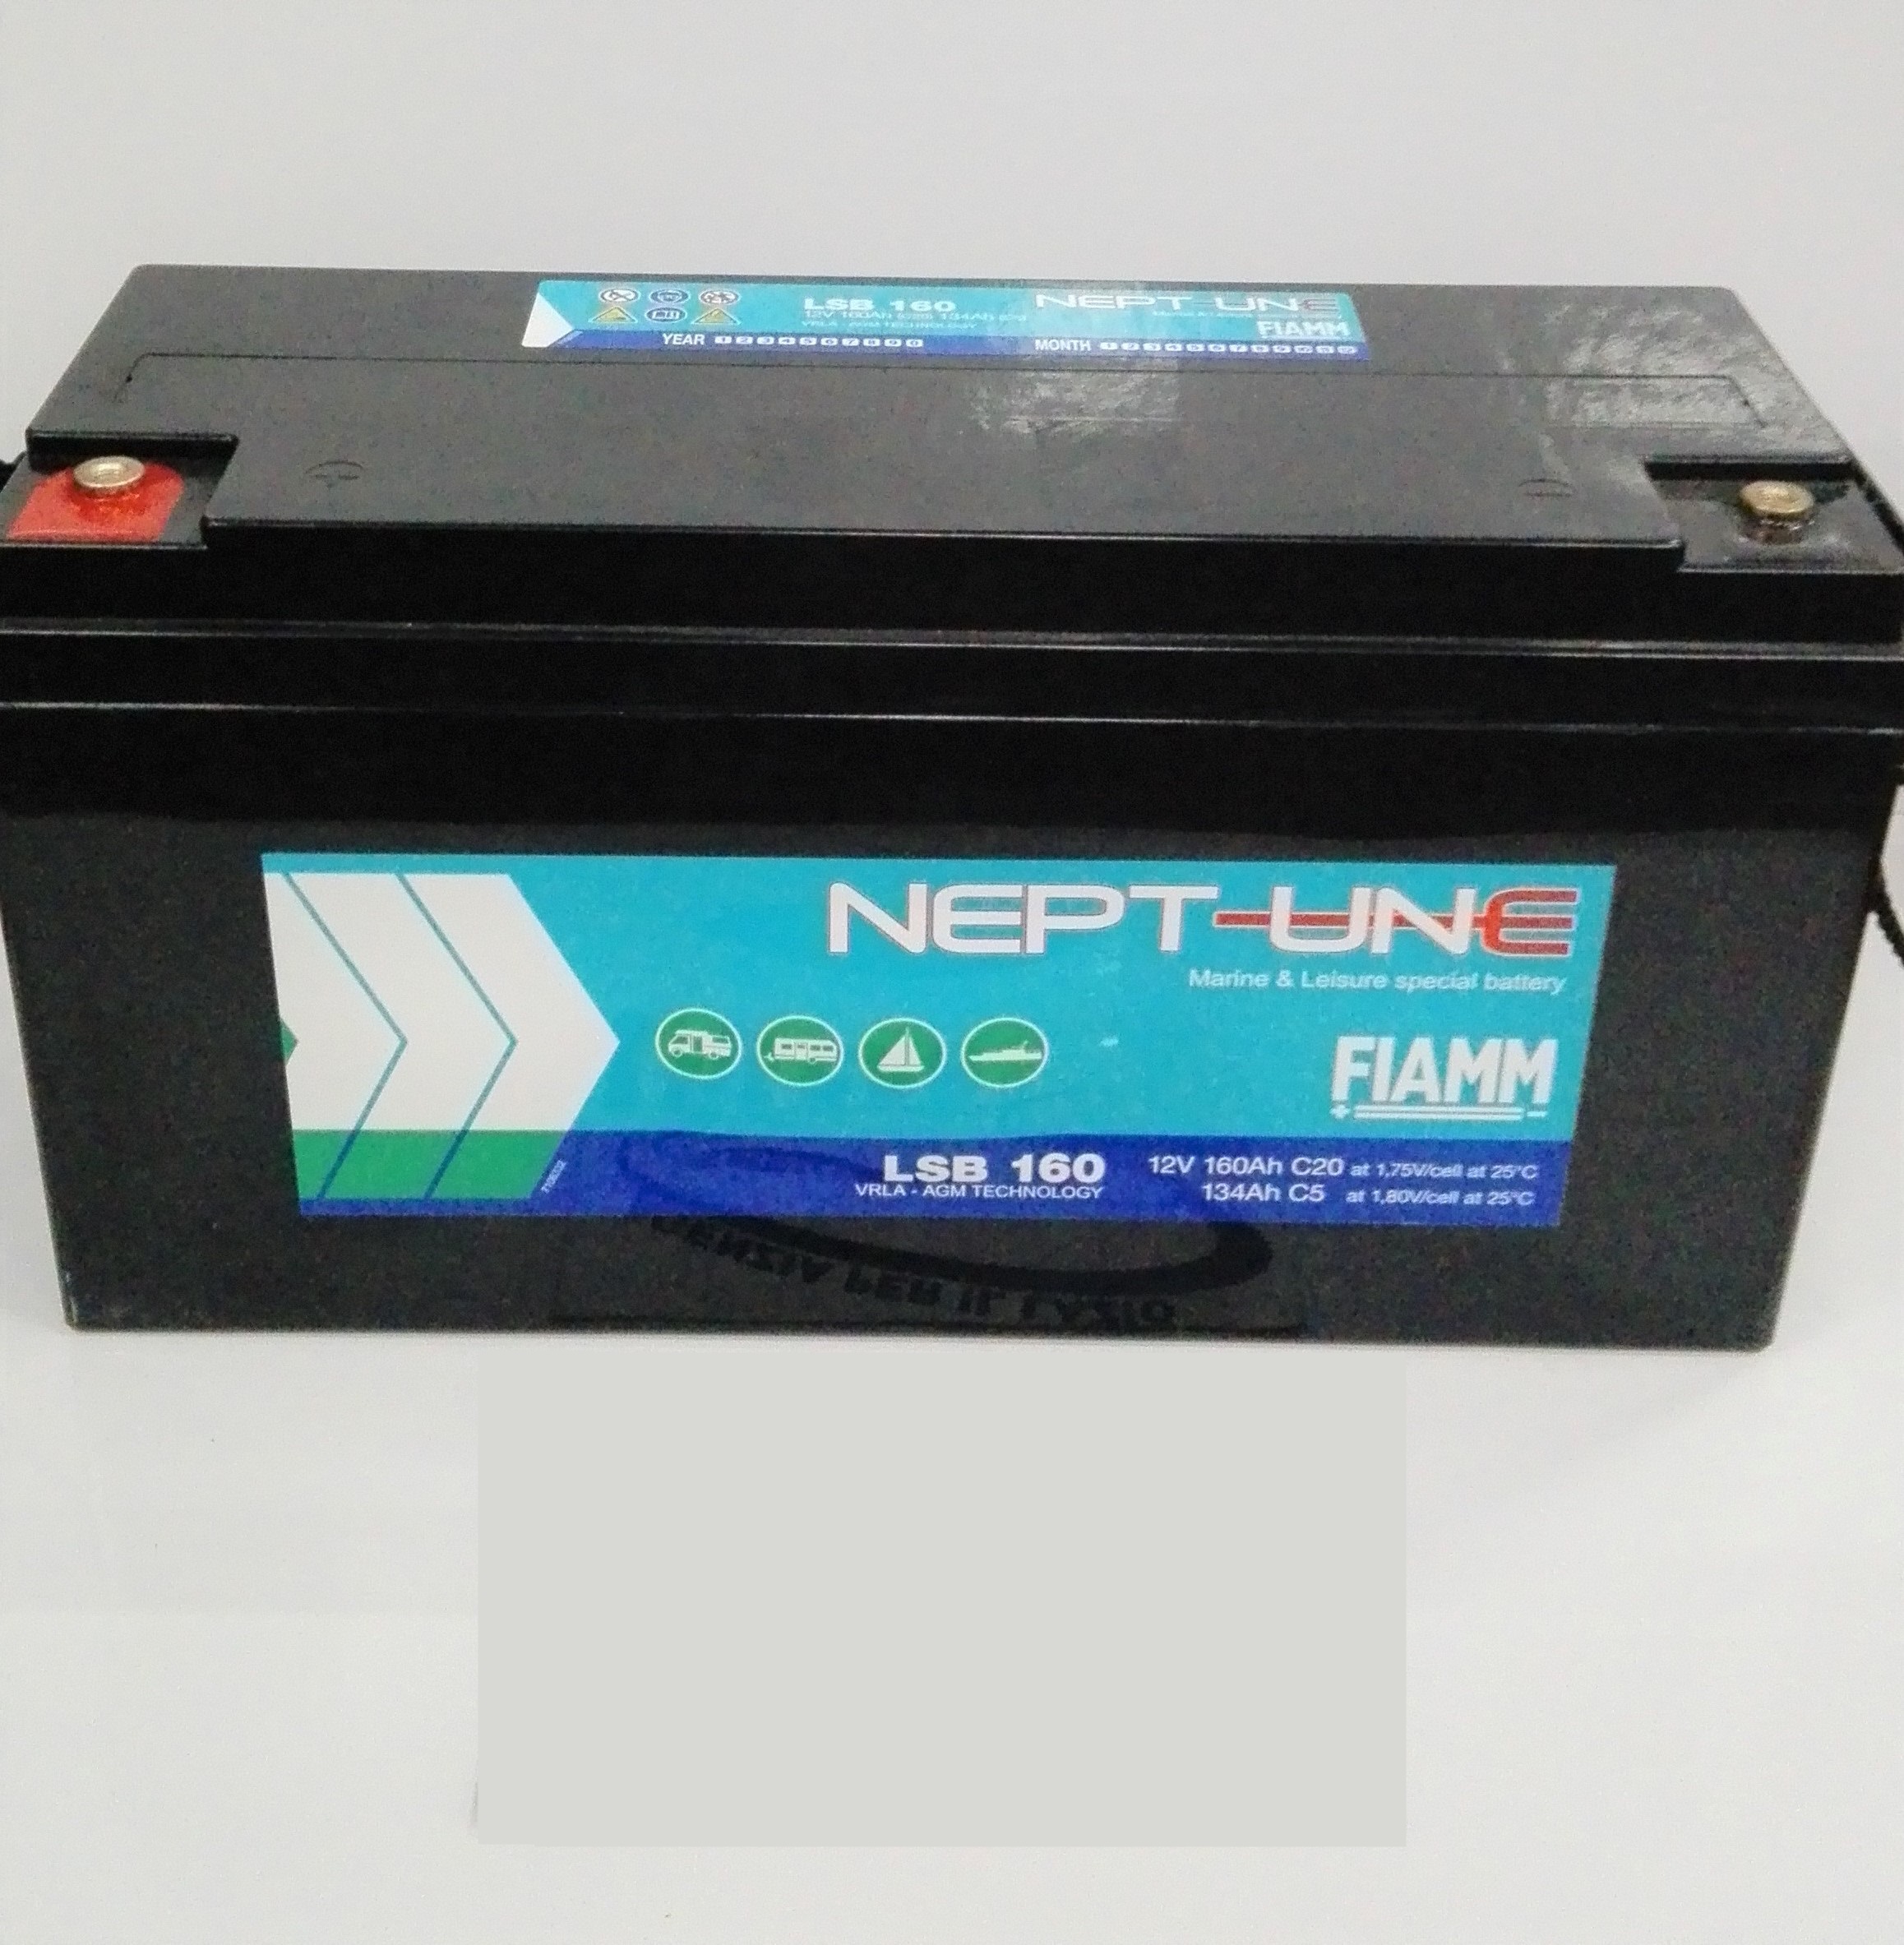 batteria-fiamm-neptune-lsb-160-12v-160ah